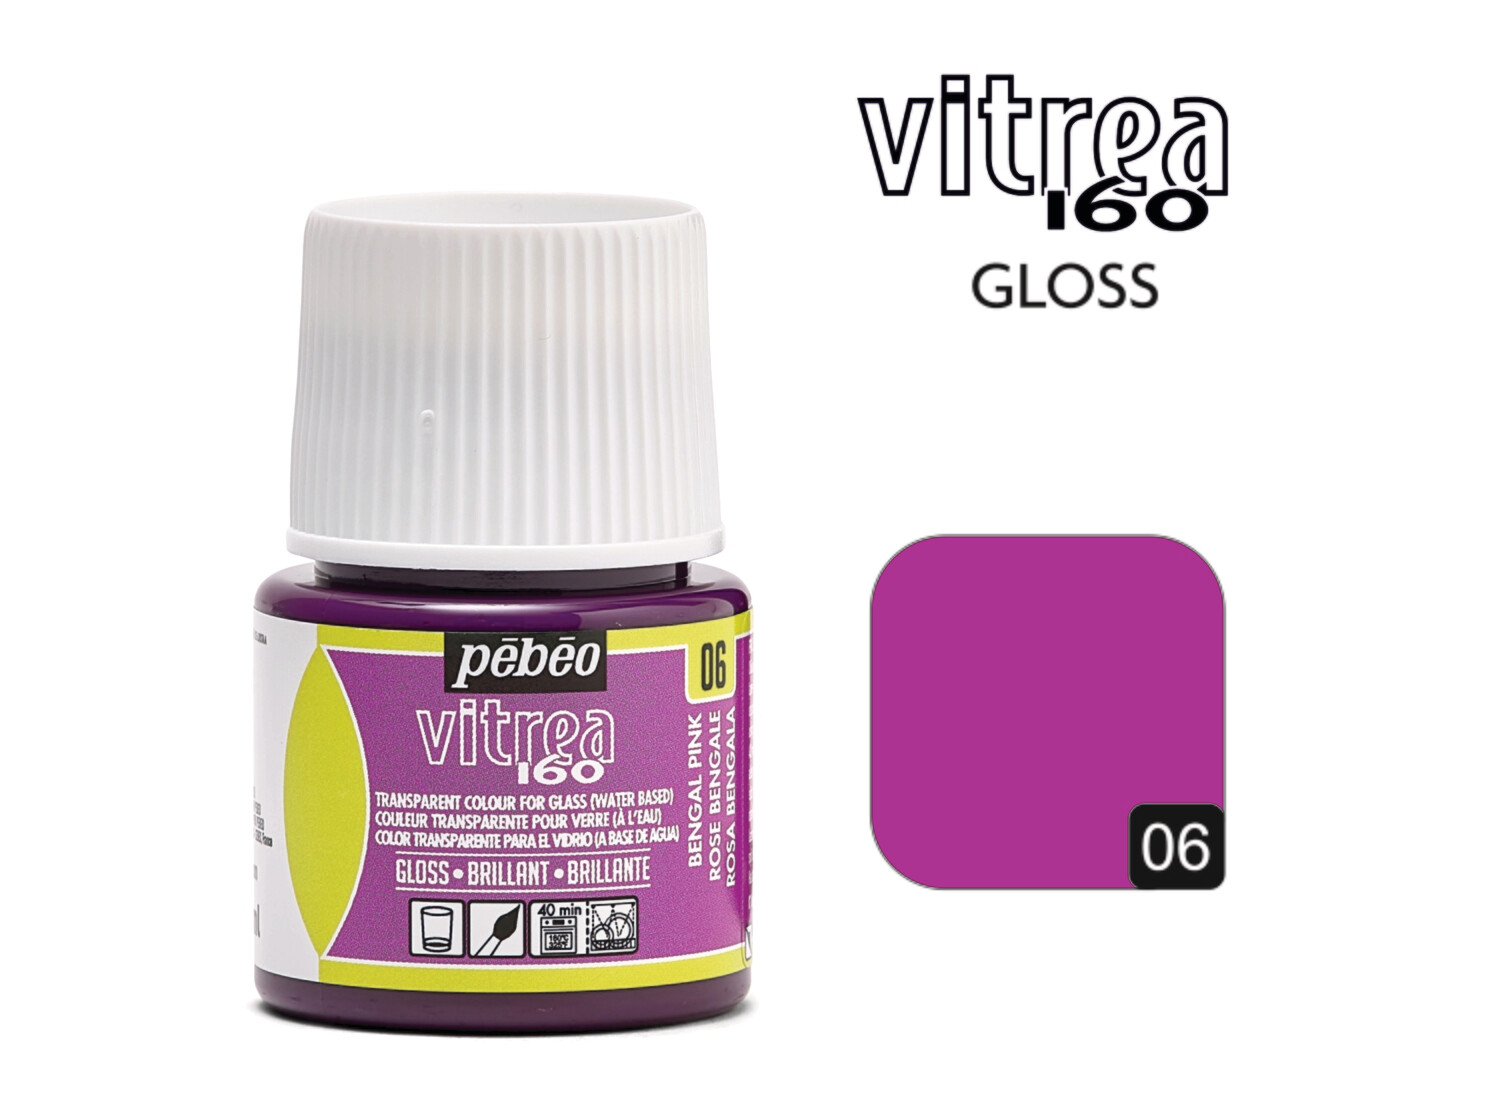 Vitrea-160 Gloss 45ml 06T Bengal Pink